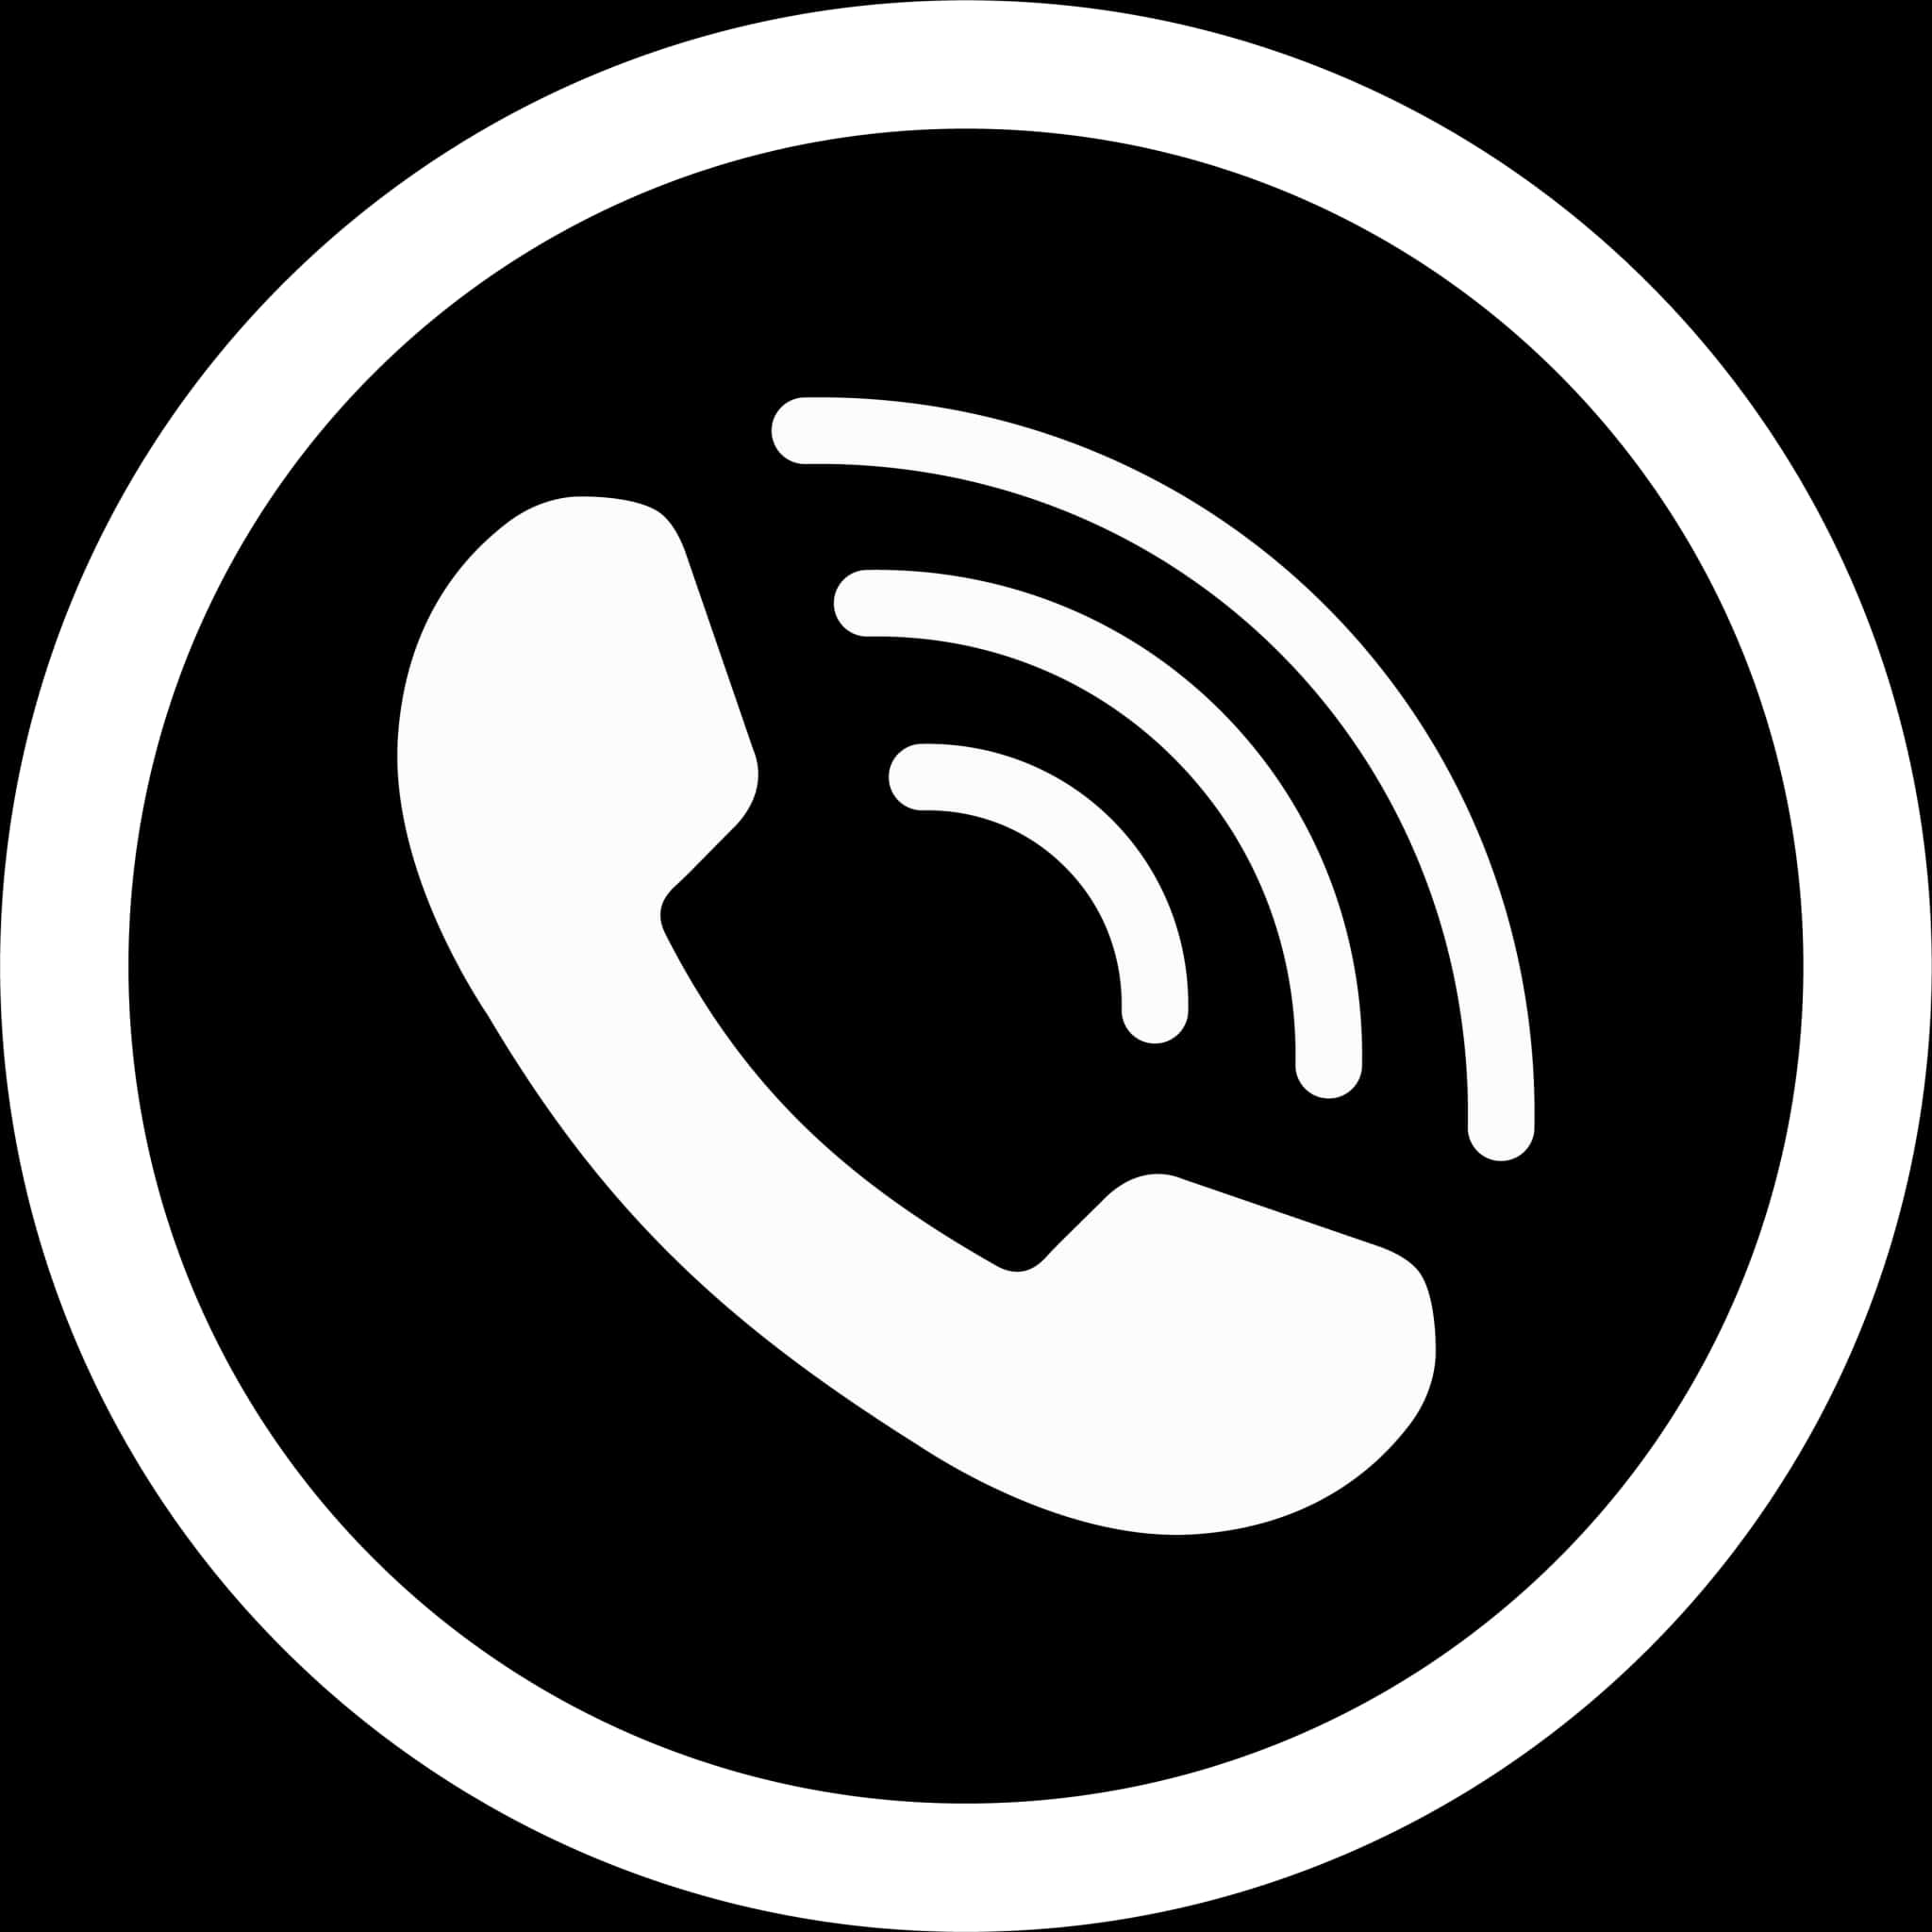 A White Phone Logo In A Circle